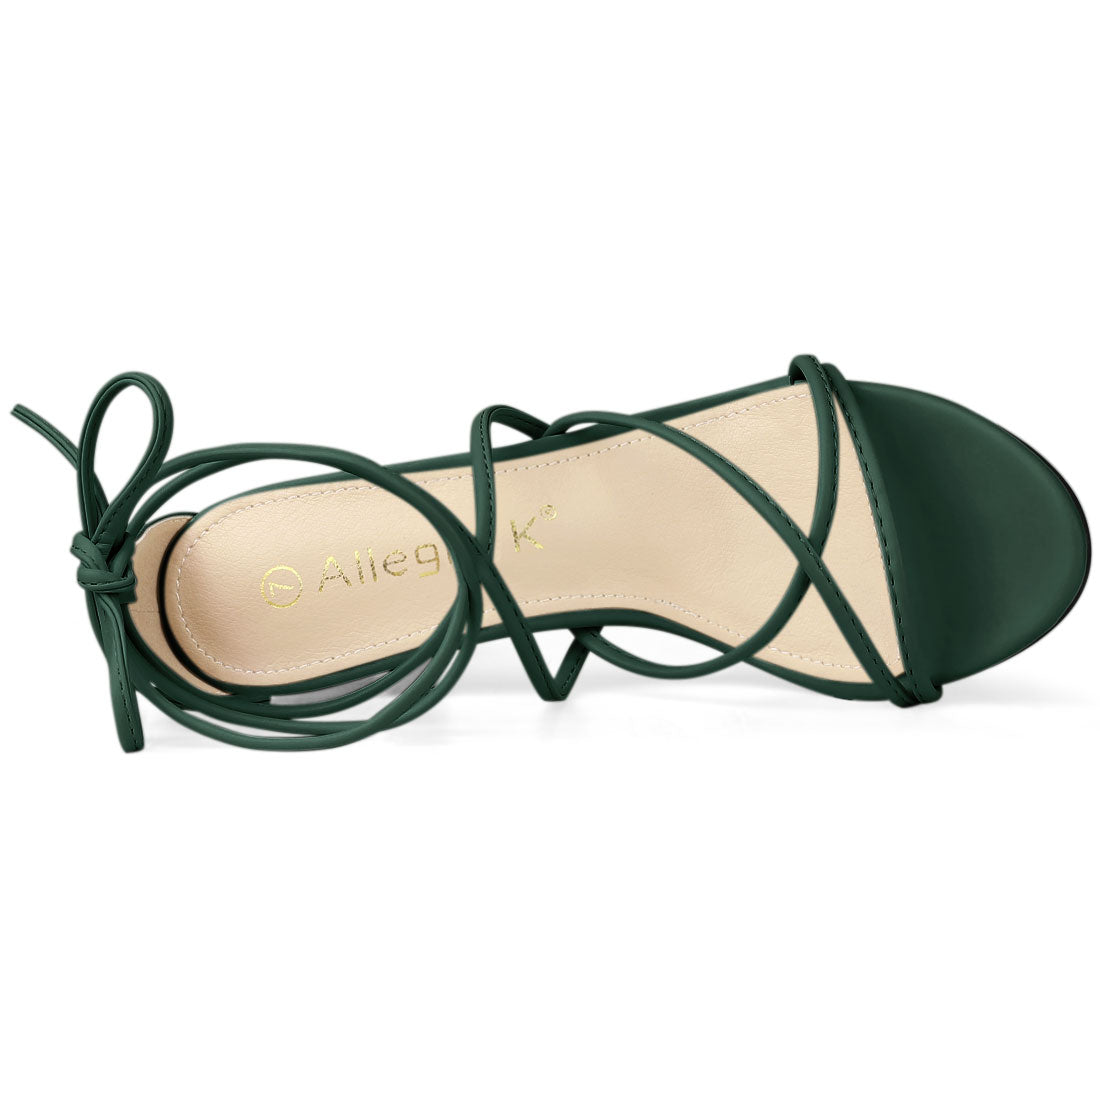 Allegra K Strappy Straps Lace Up Chunky Gold Heel Sandals Dark Green